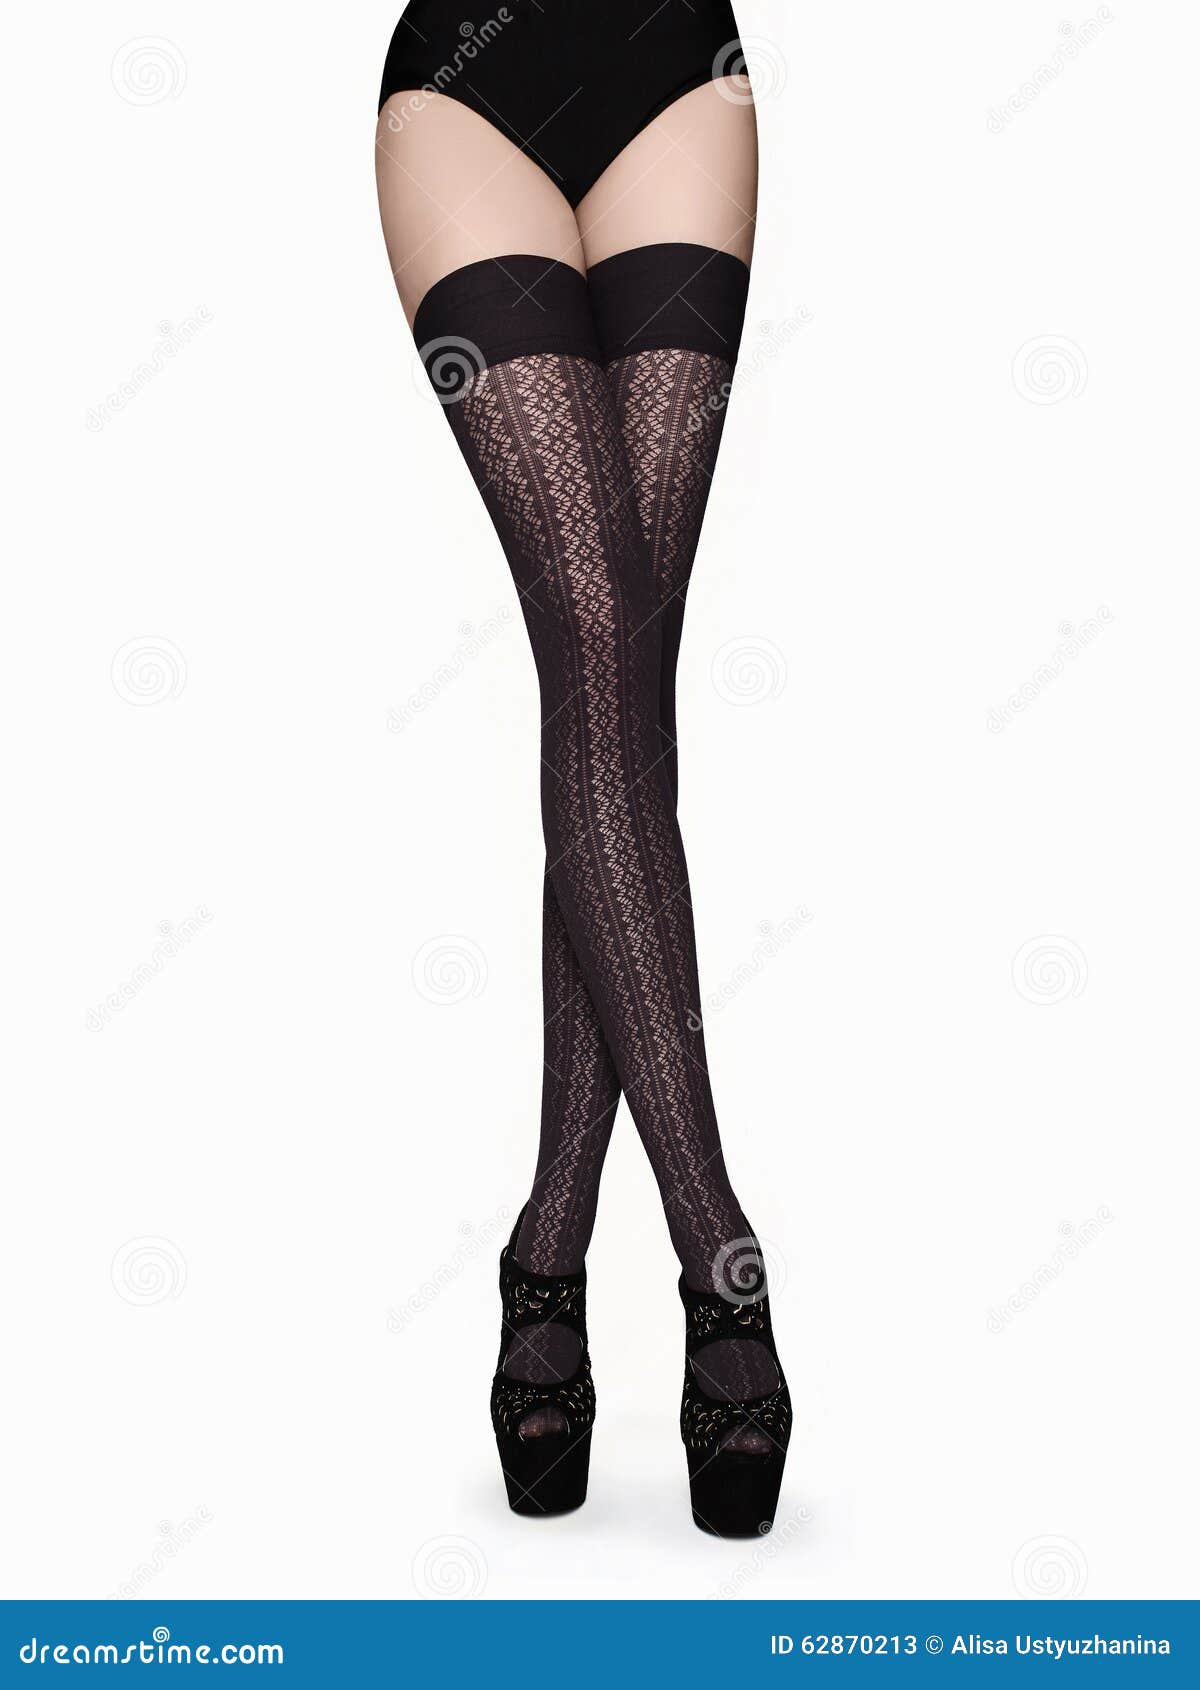 Beautiful Legs in Stockings Stock Image - Image of fashion, monochrome:  62870213